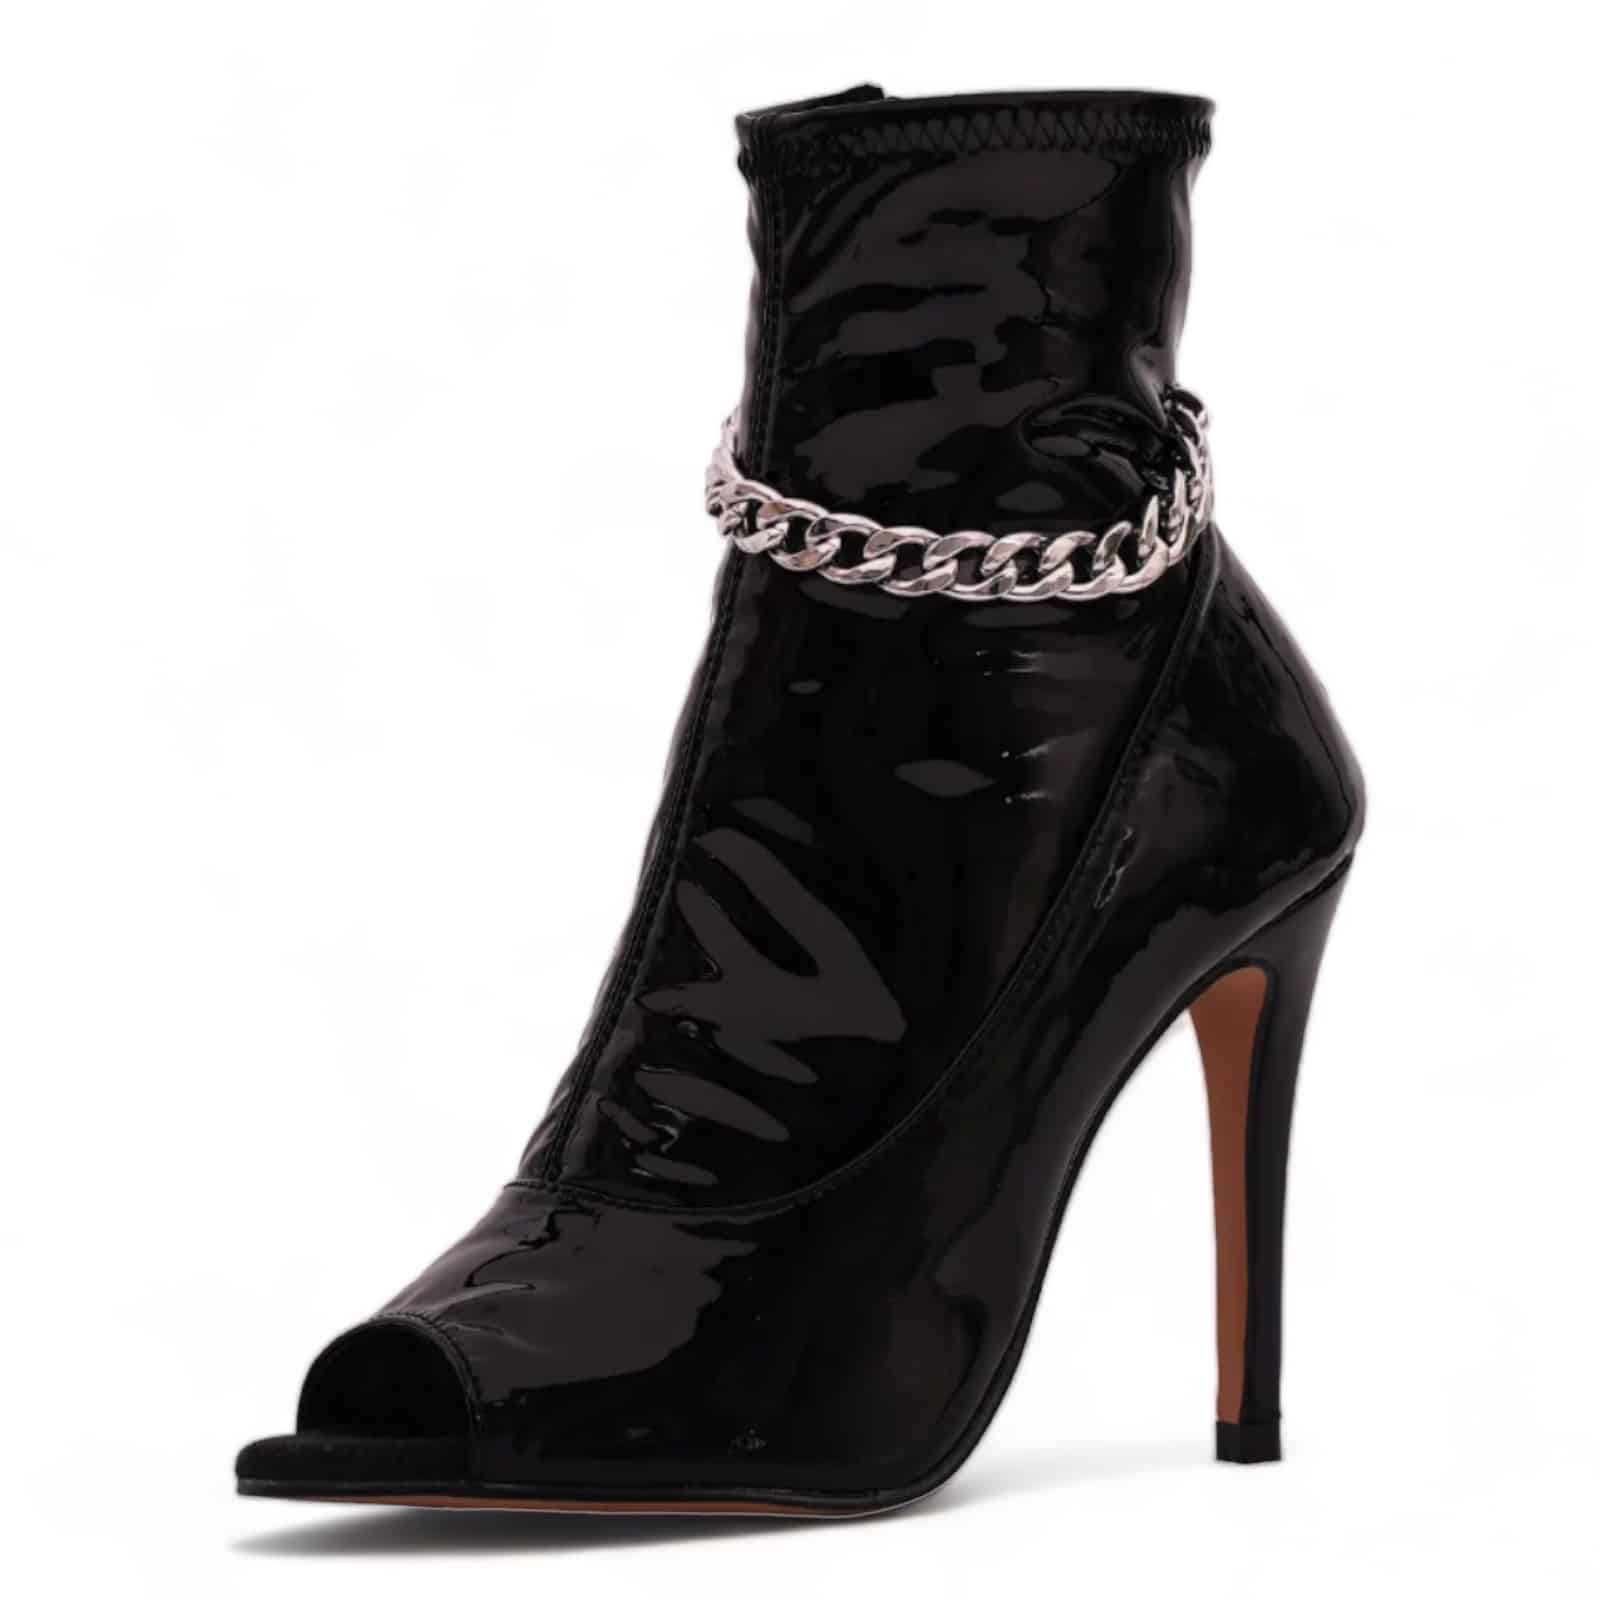 black boots with heels for heels dancers, latin dancers and ballroom dancers